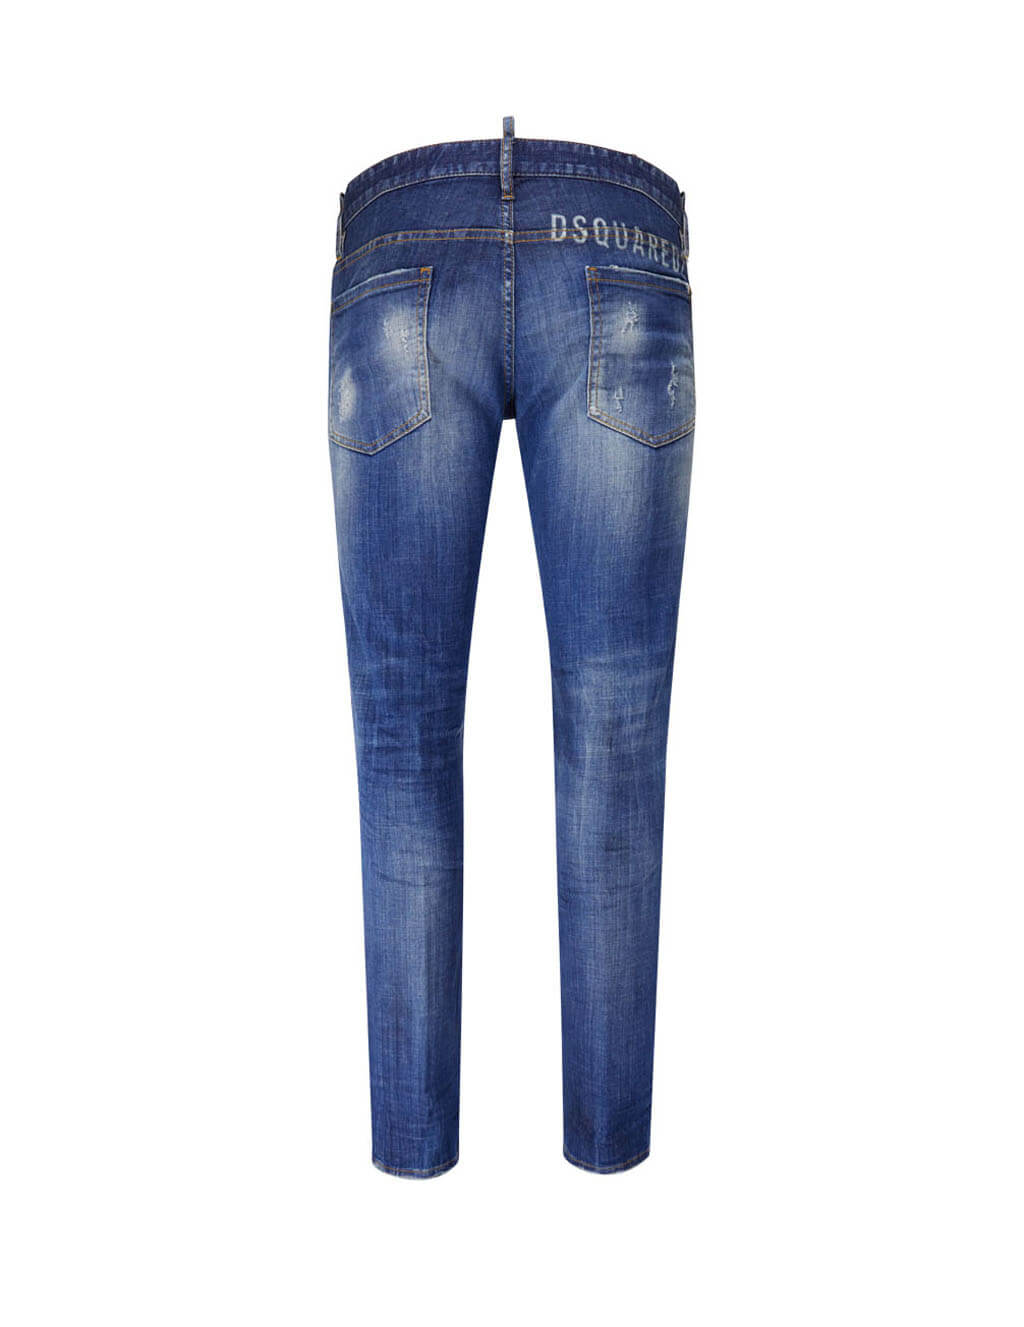 dsquared2 jeans blue